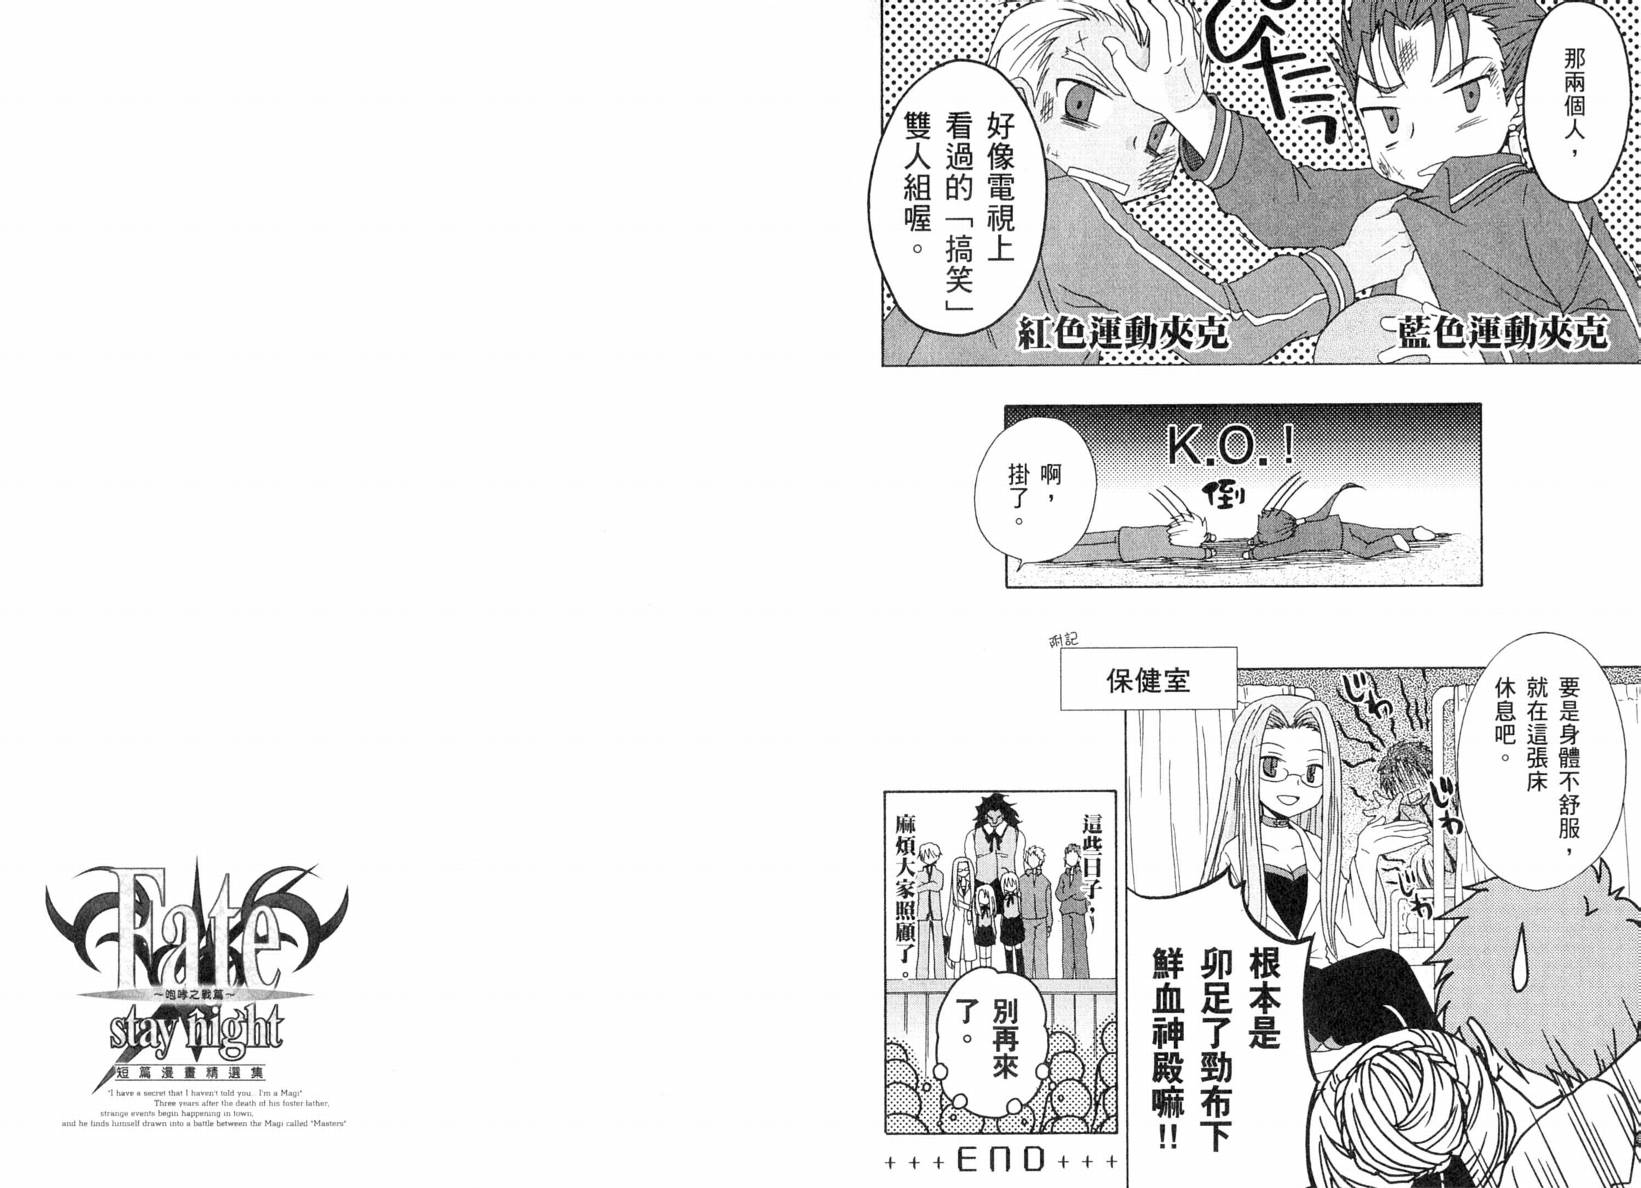 Fatestaynight 短篇漫画精选集 - 咆哮之战篇(2/2) - 6